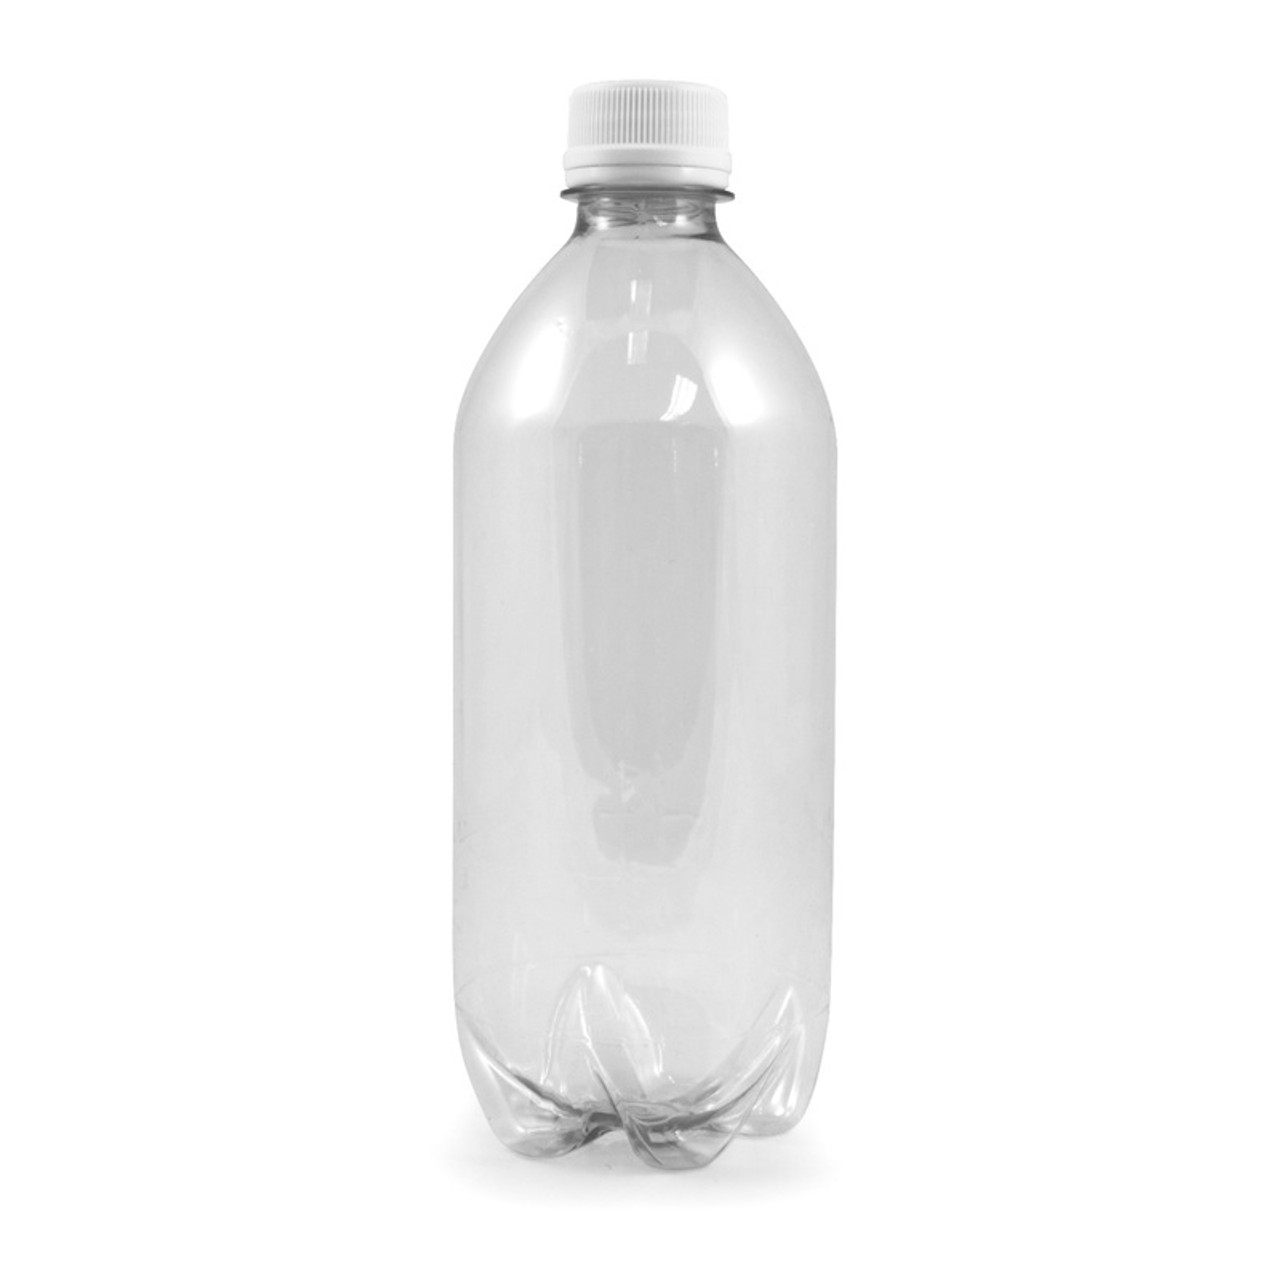 Empty Bottles for PerioSonic Irrigators (6 Bottles & Caps)